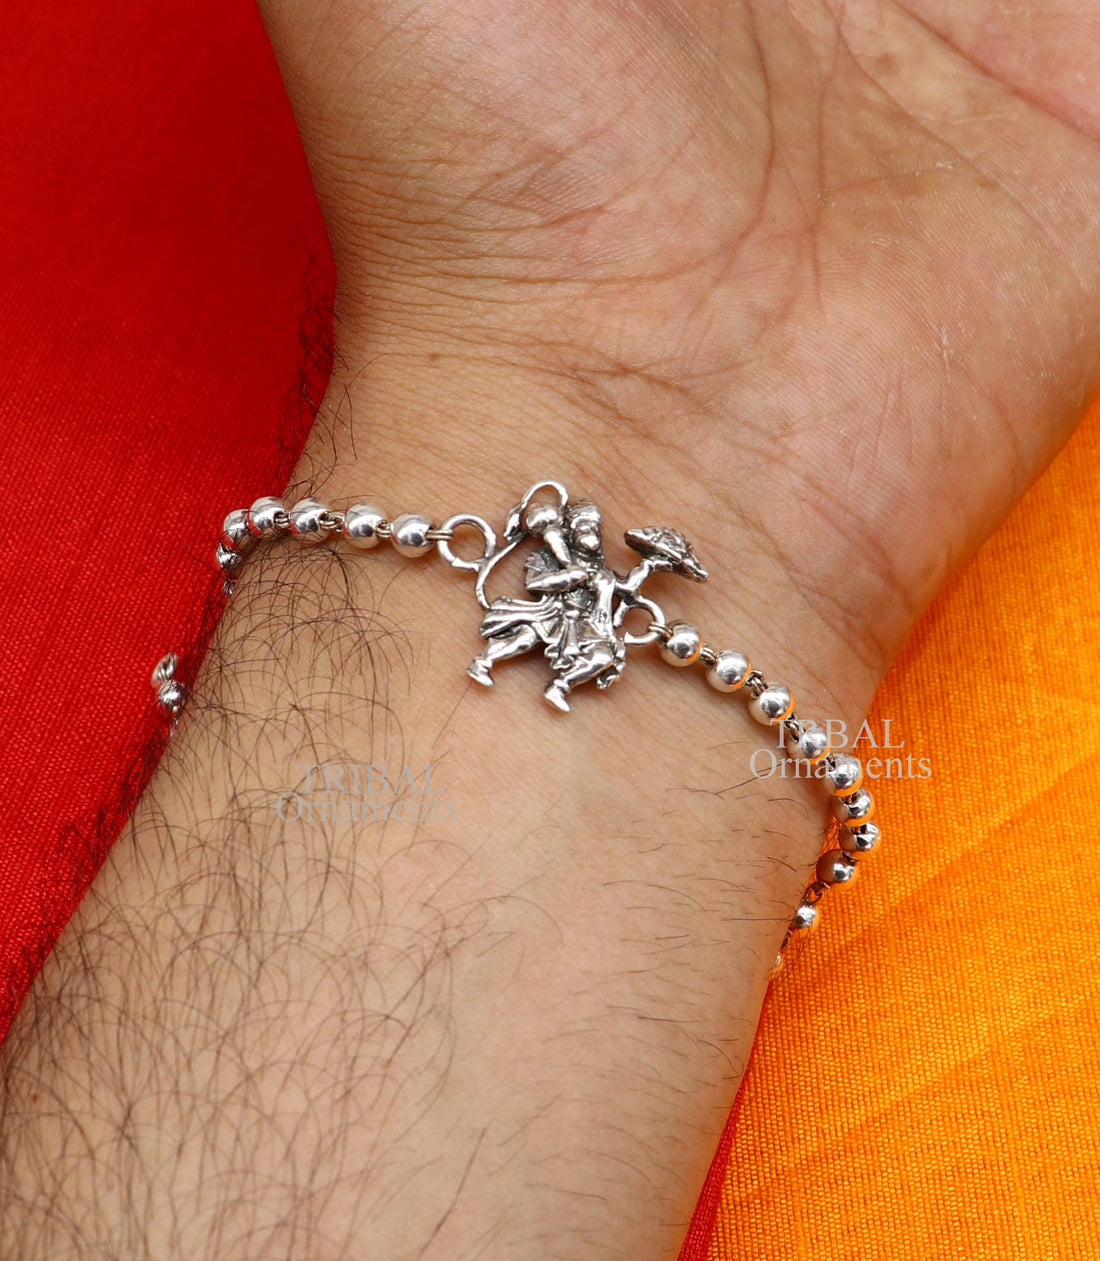 Lord hanuman Rakhi 925 sterling silver handmade lord hanuman design Rakhi bracelet, amazing Rudraksha, Tulsi beaded bracelet rk184 - TRIBAL ORNAMENTS